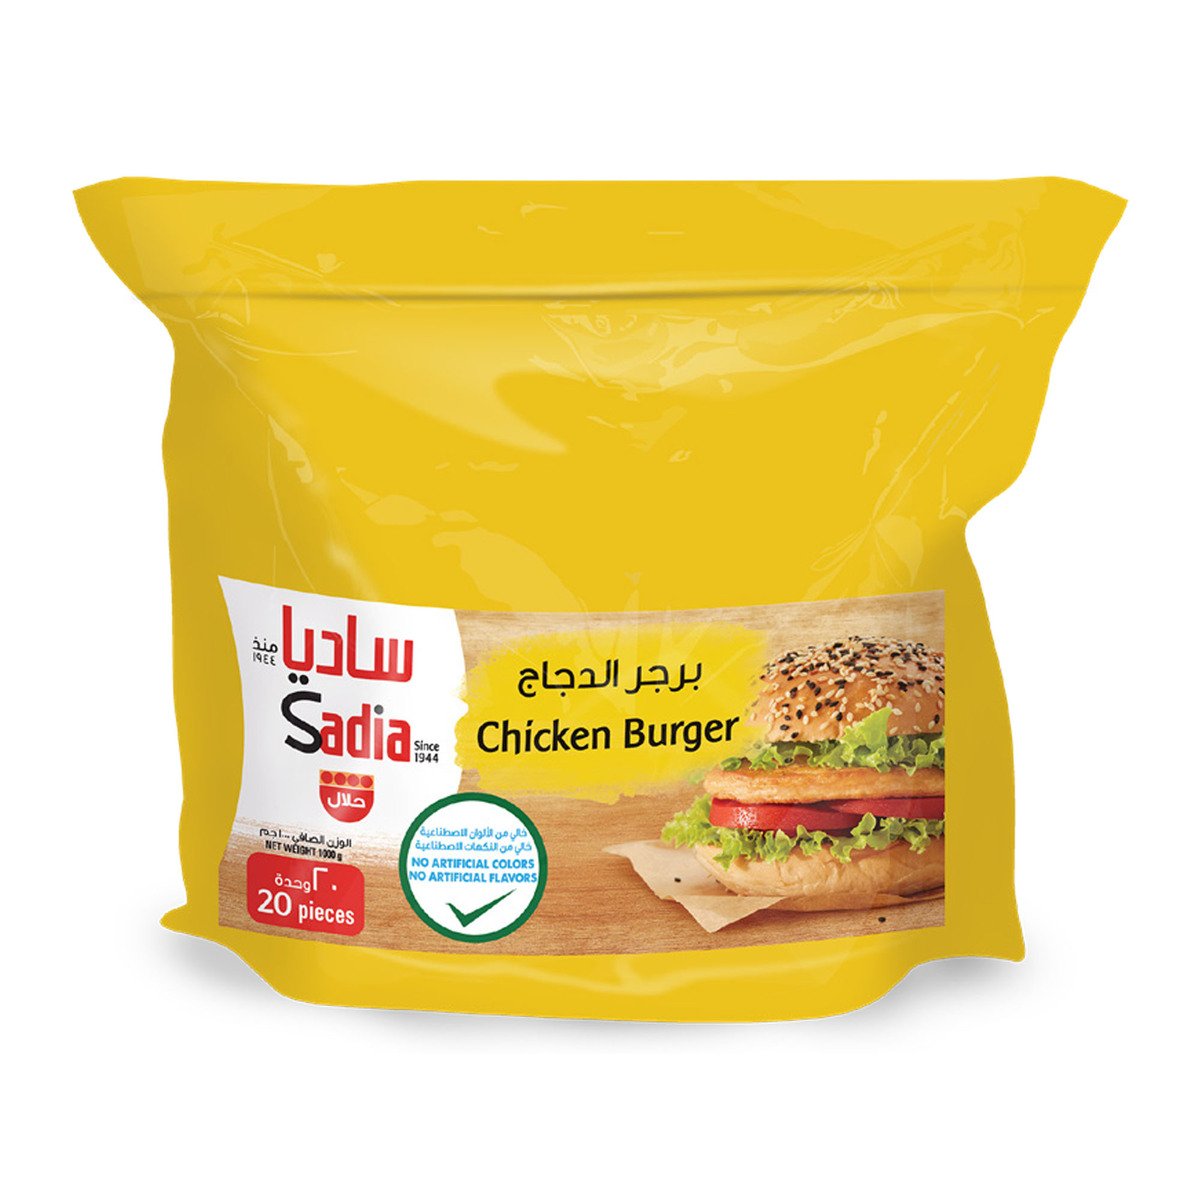 Sadia Chicken Burger 20 pcs Bag 1 kg